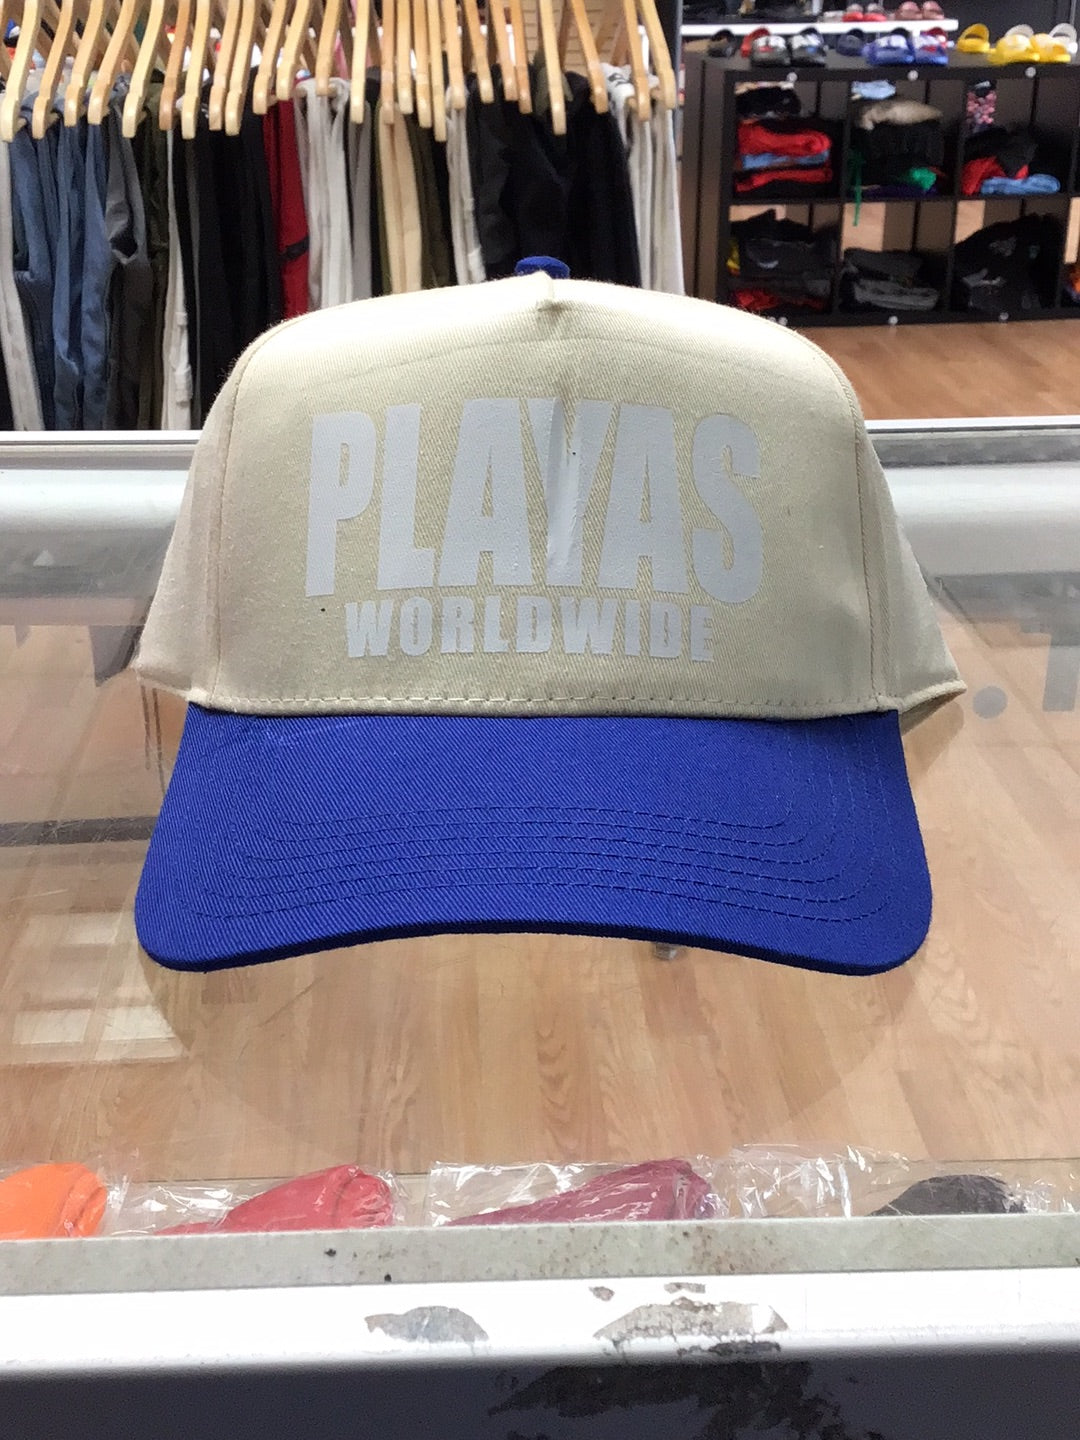 Playas Worldwide hat